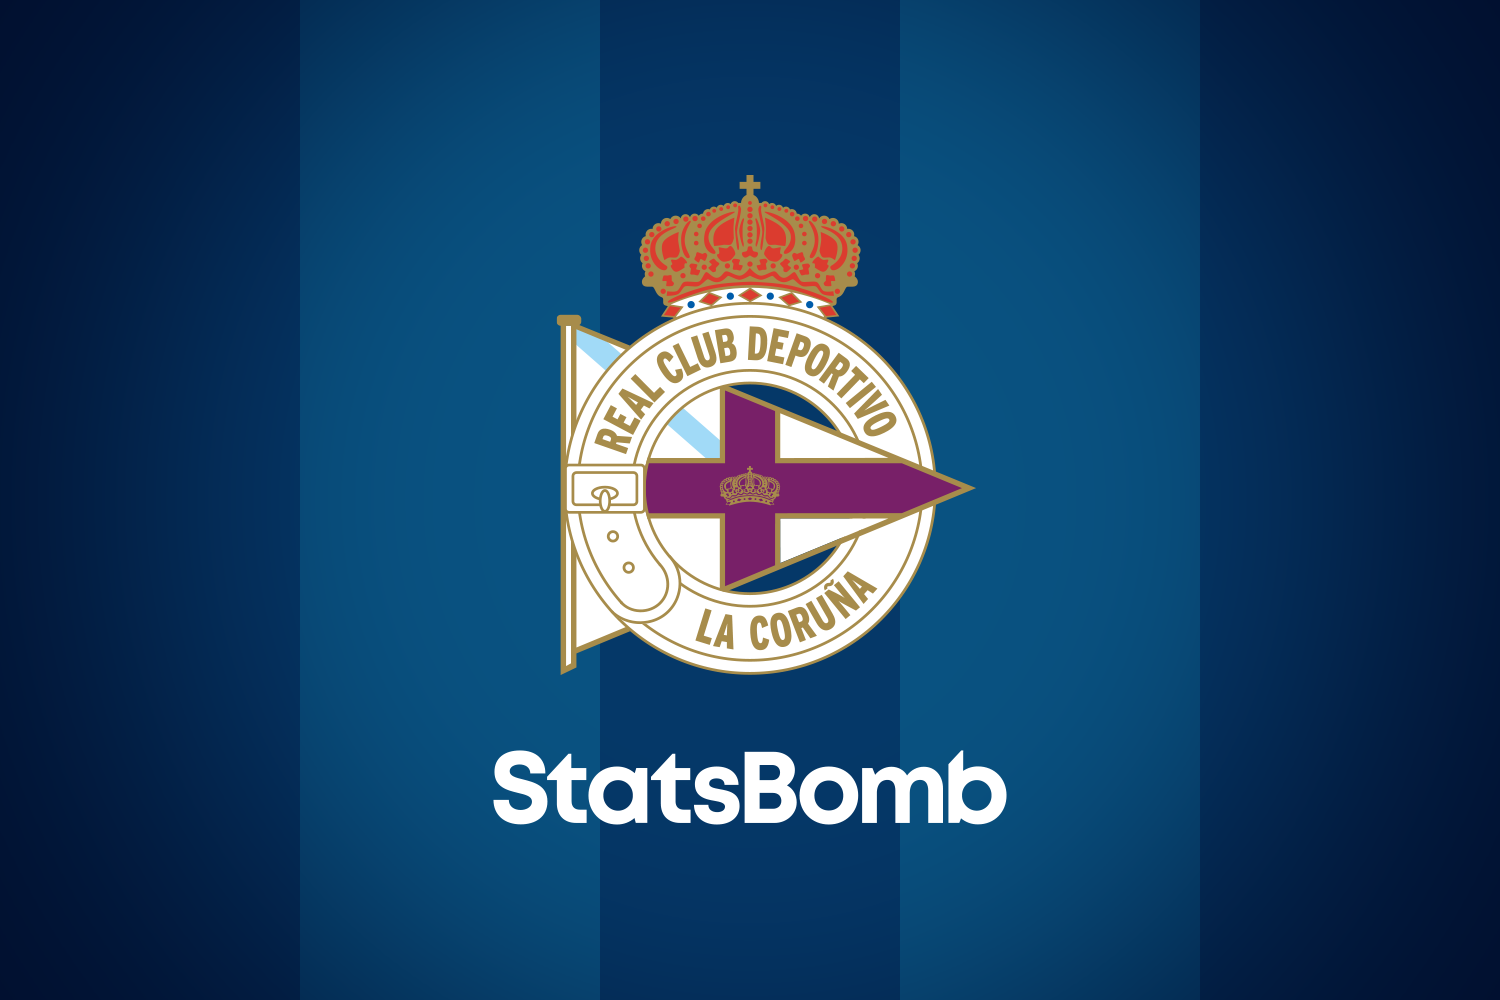 StatsBomb Agree Partnership With Deportivo de la Coruña